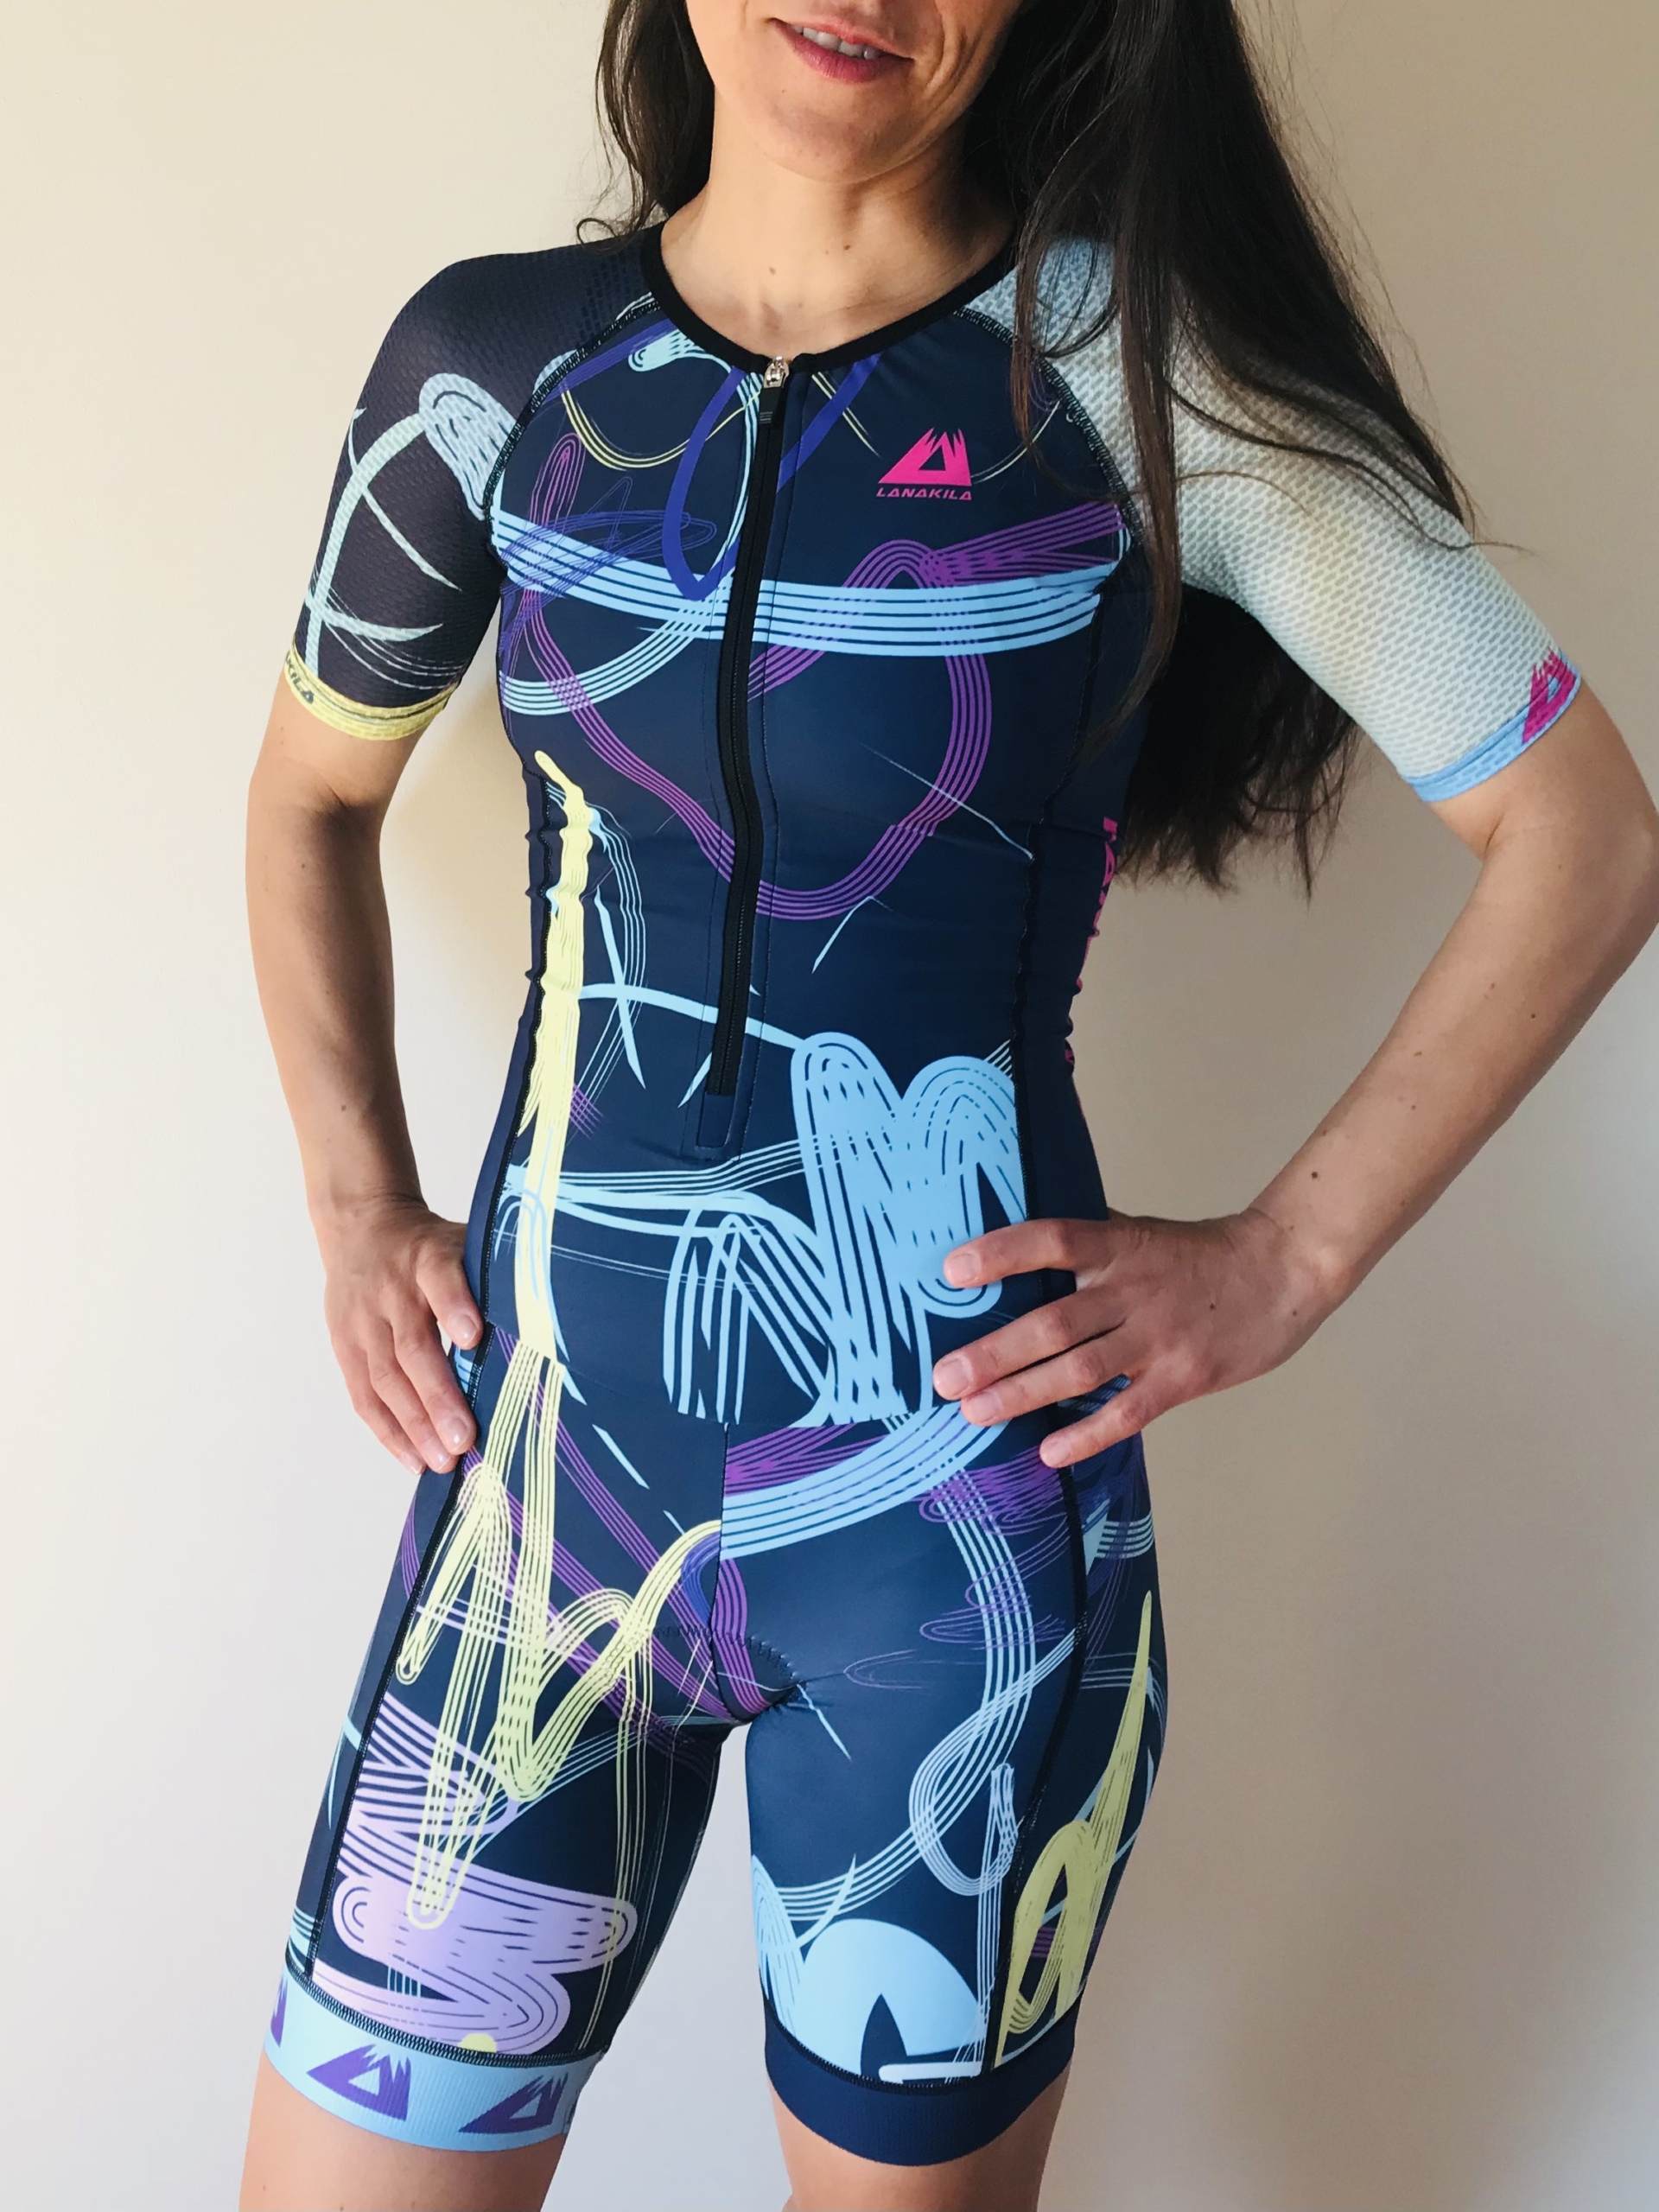 Frauen Triathlon Anzug – Lanakila im Design Universe